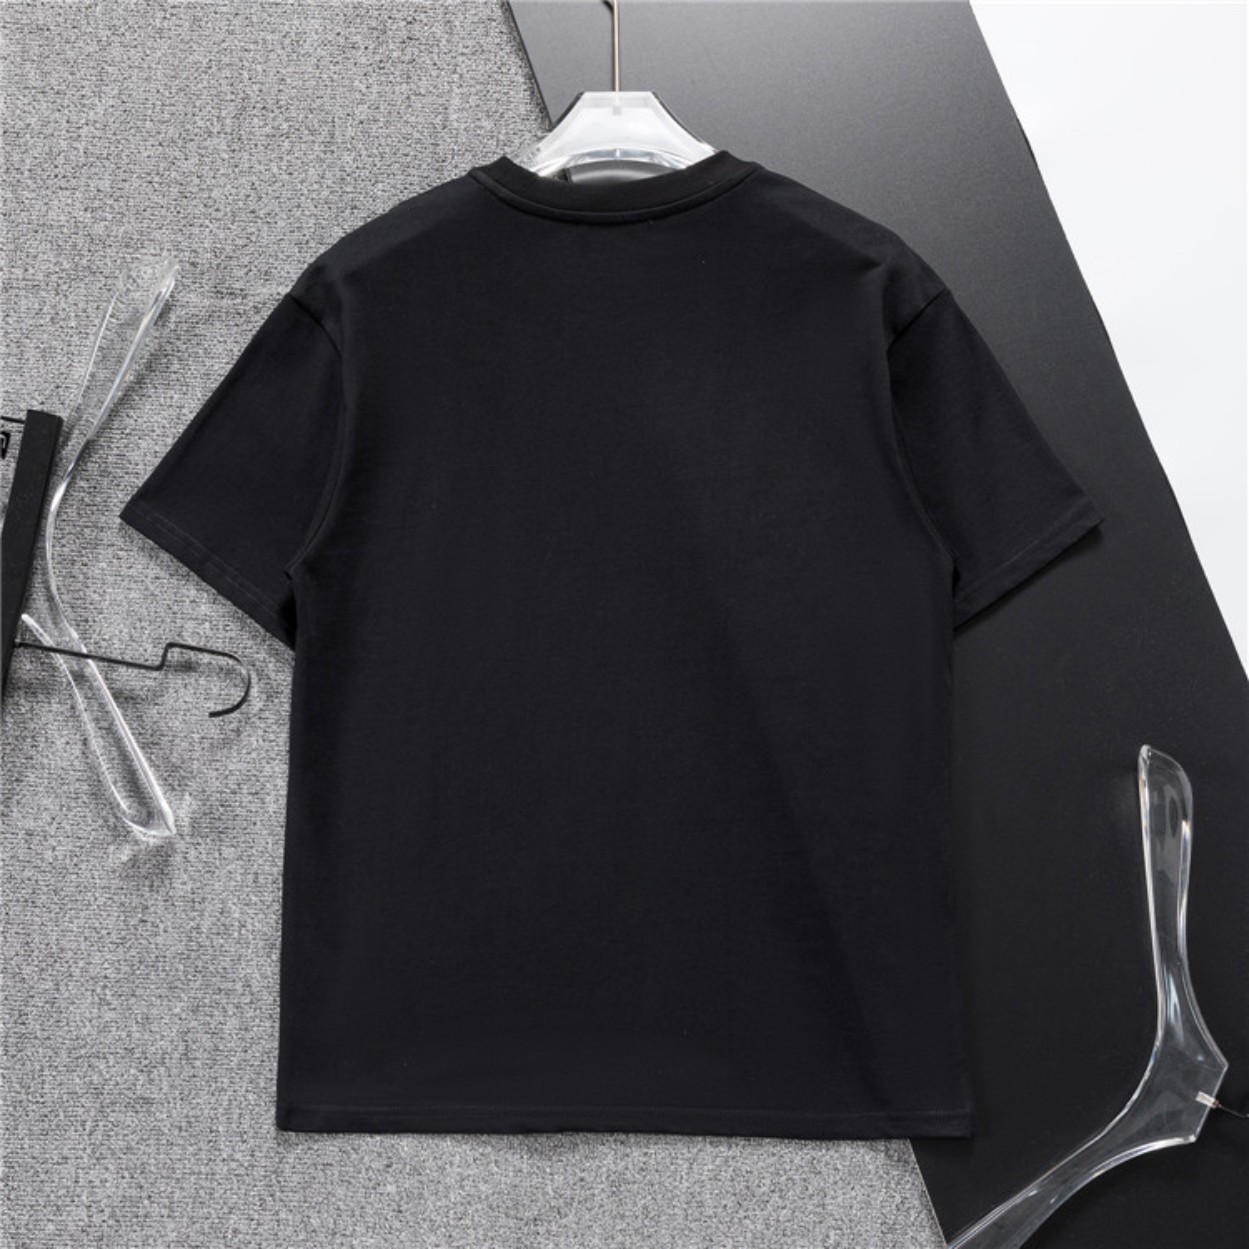 Summer Mens T-shirt Designer T-shirt LEXURIE BRAND LETTER IMPRESSION DE HAUTE QUALLE CHIRTER THIRT ASIAN TAILLE M-3XL YY9